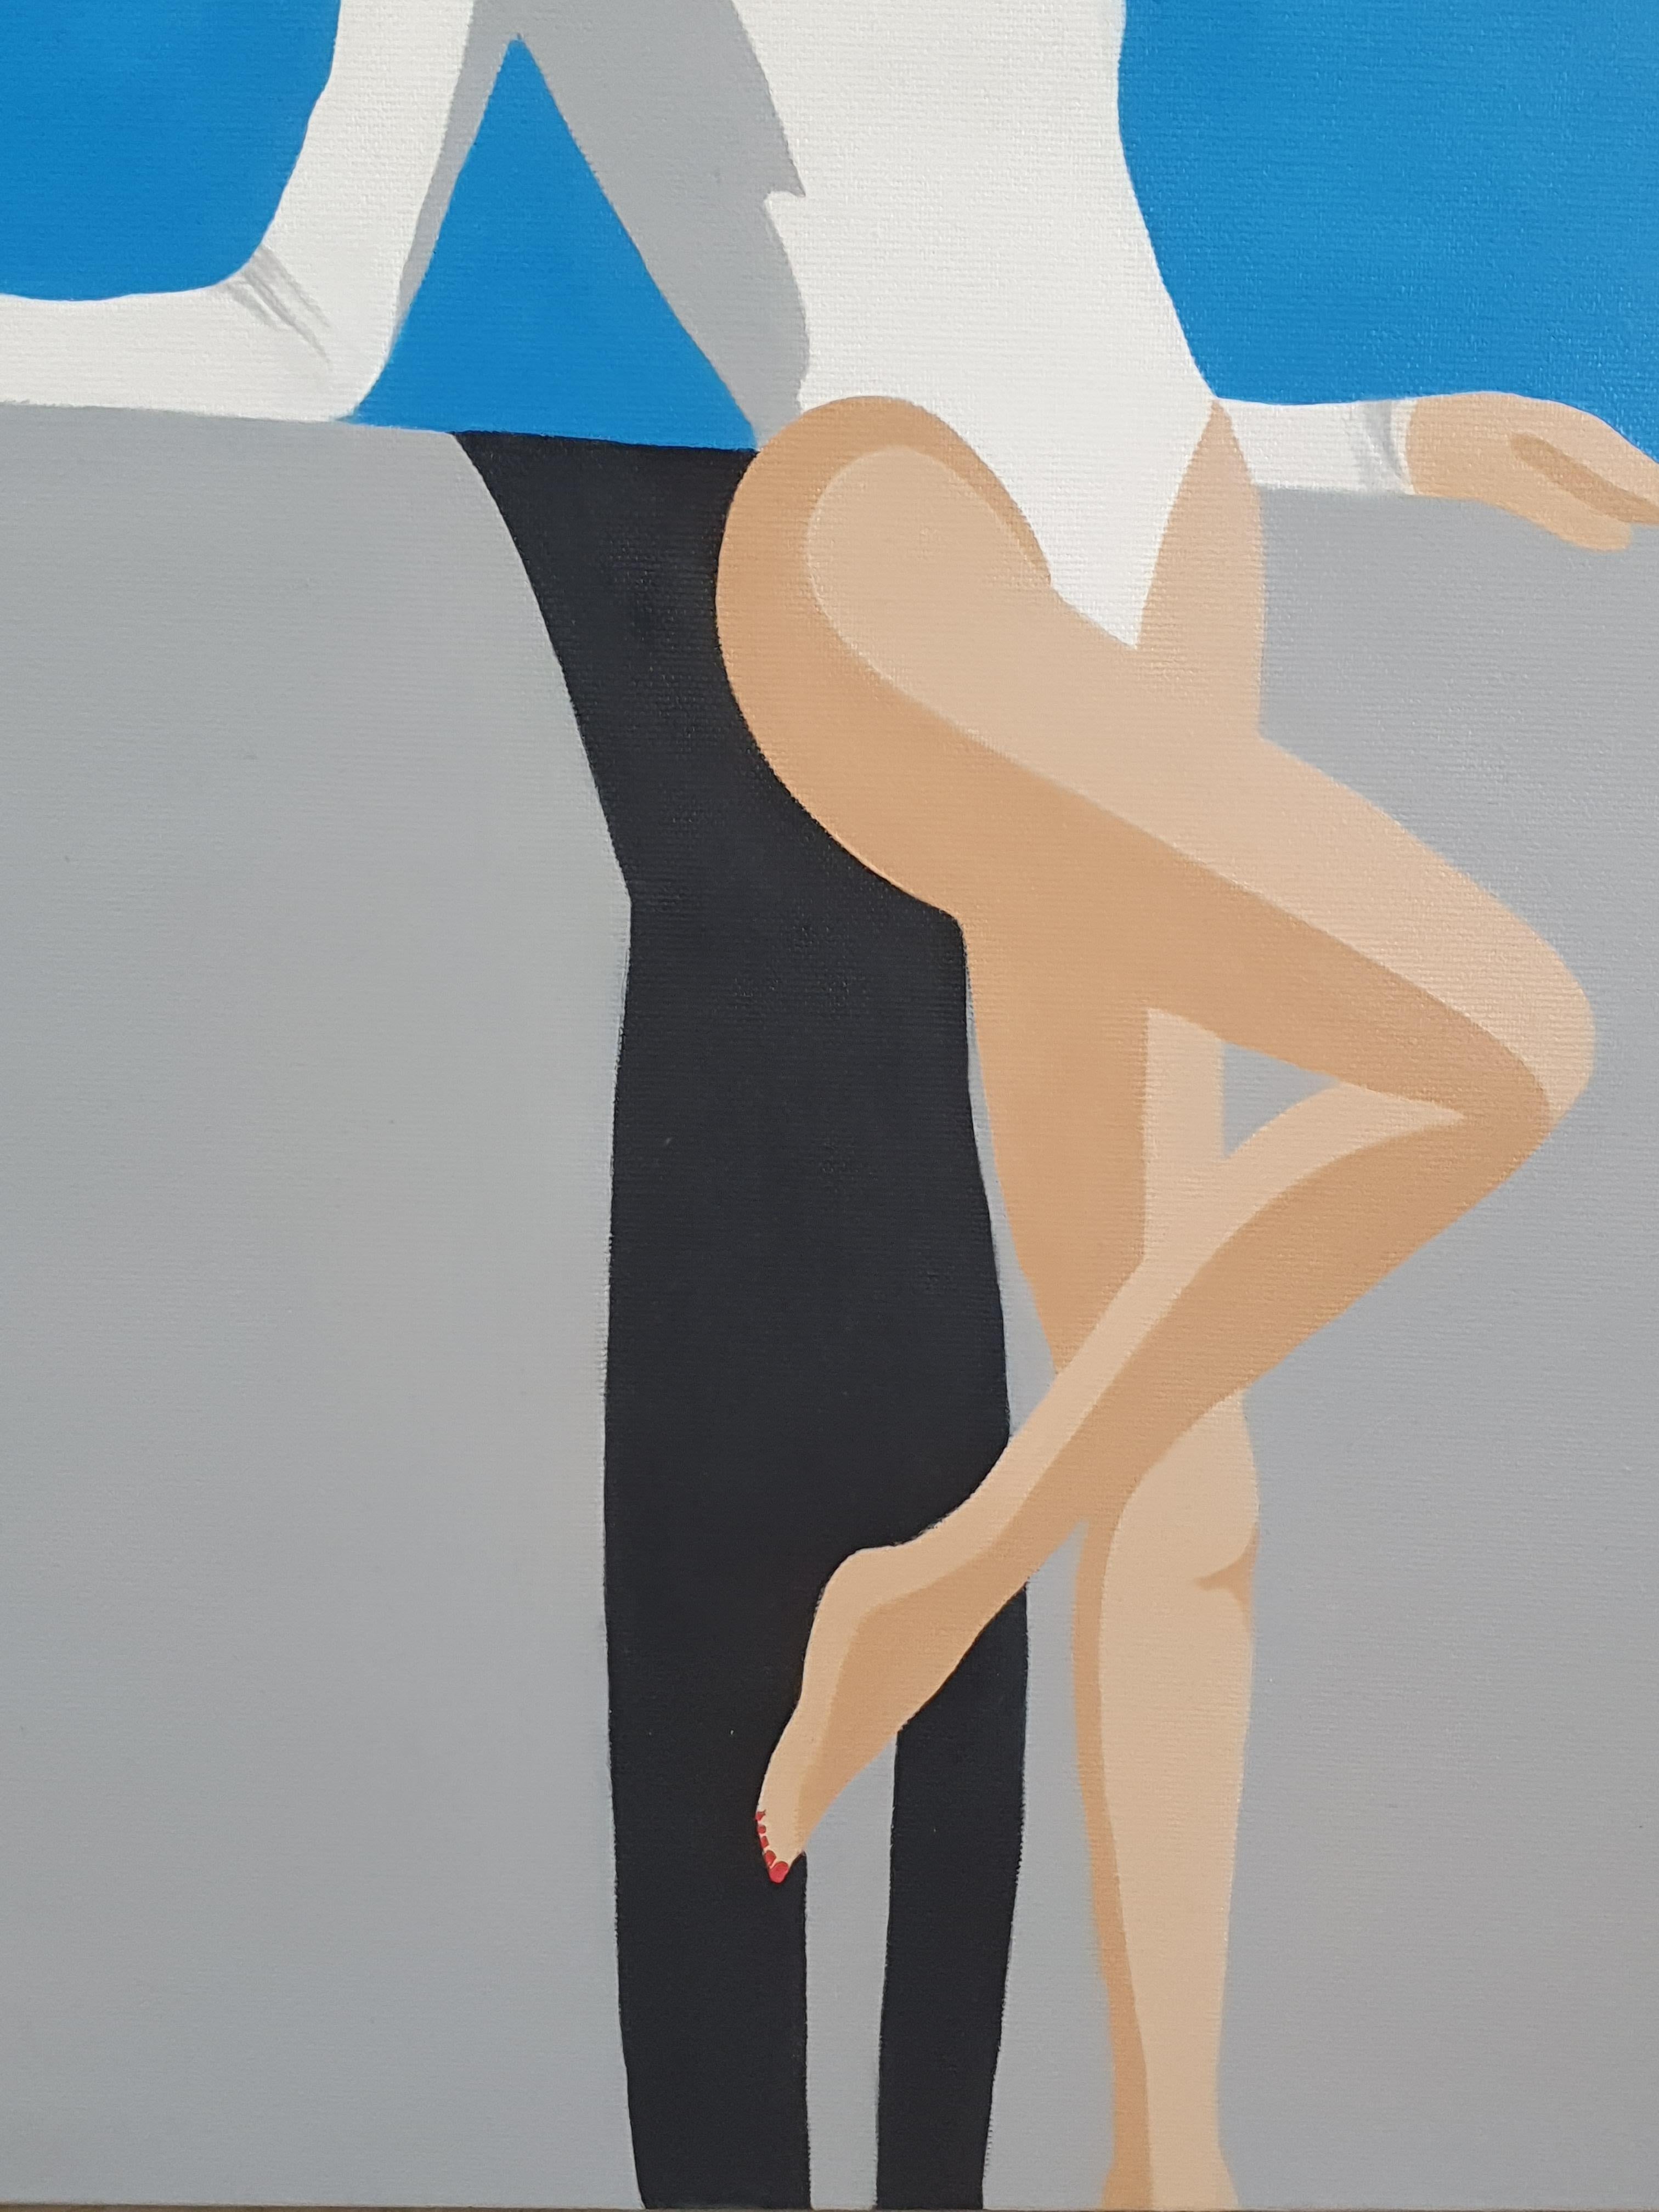 Blue sky - contemporary minimalist painting - Contemporary Painting by Noa Havatzelet